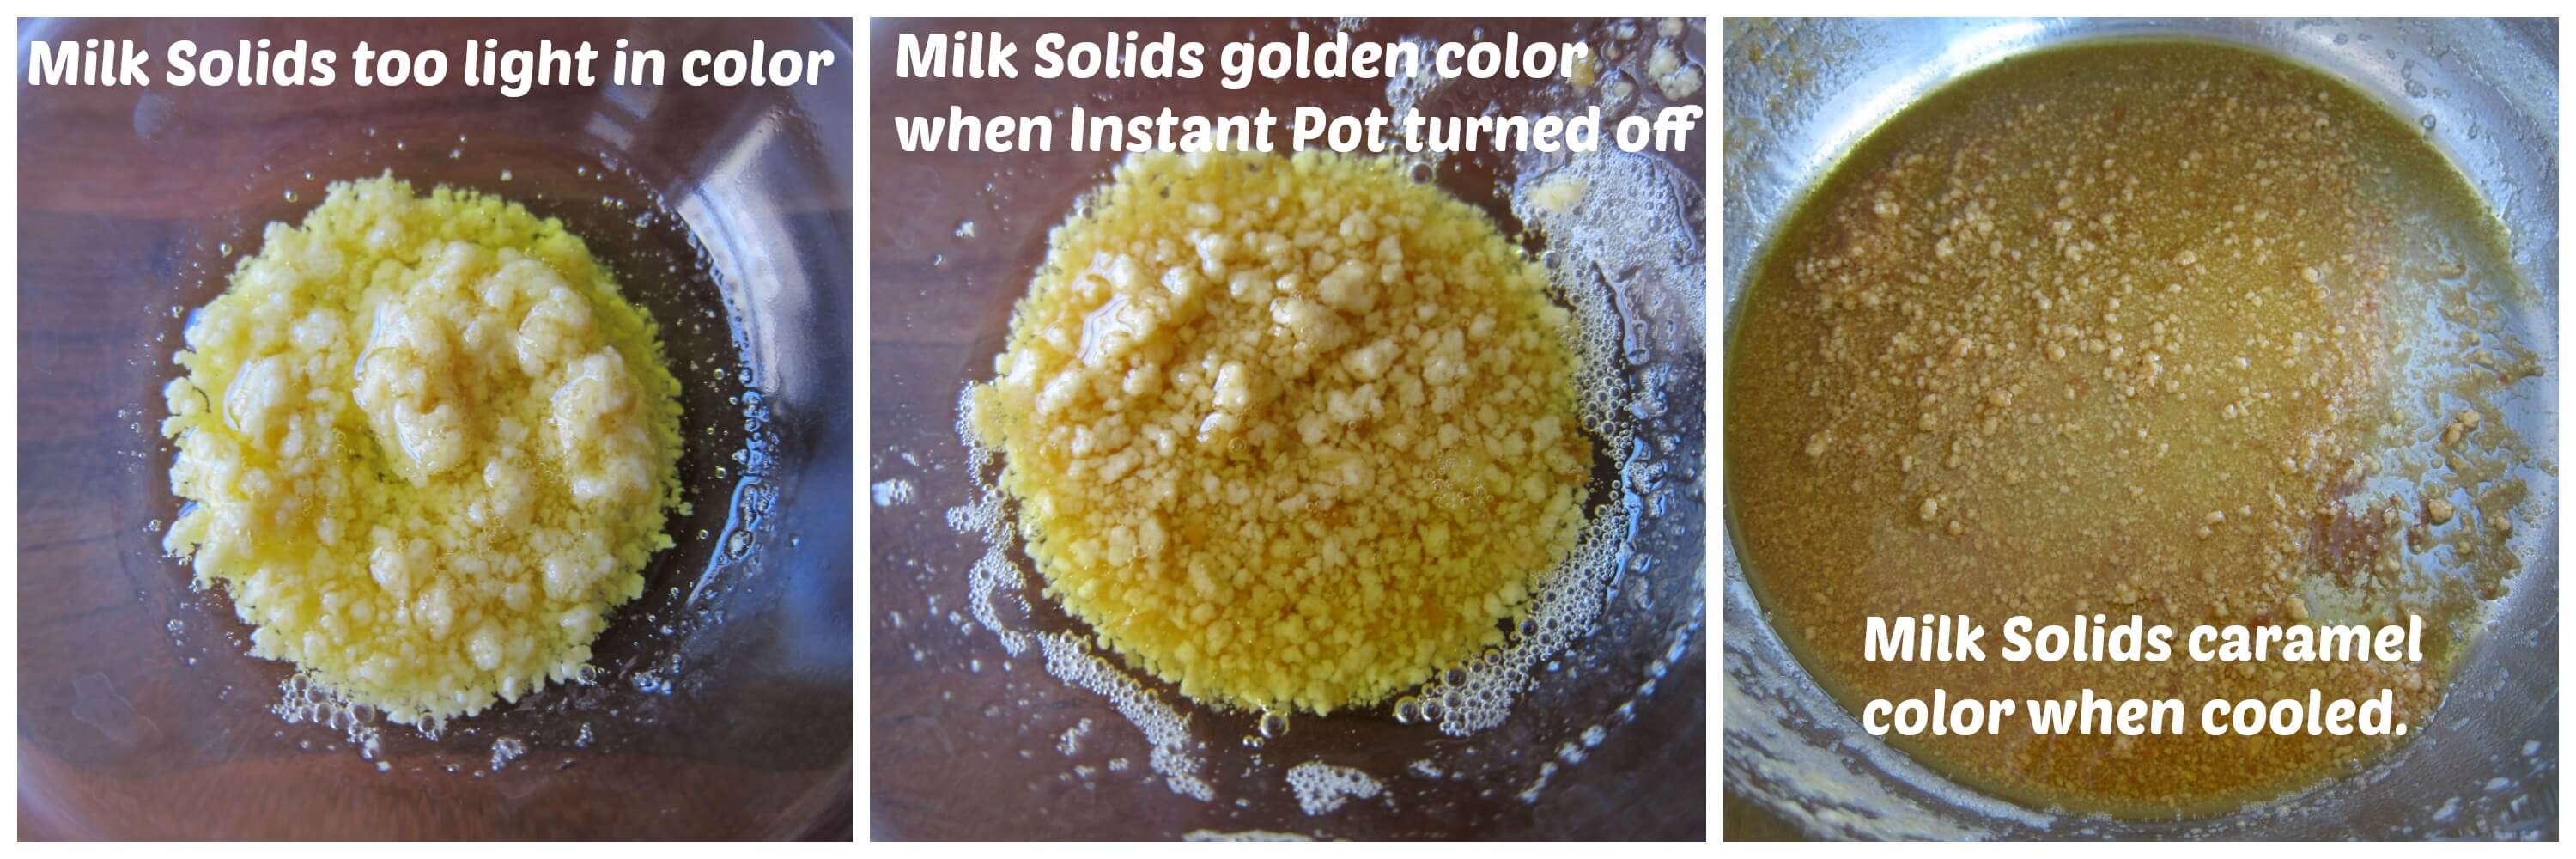 Instant Pot Ghee collage - milk solids too light, milk solids golden, milk solids caramel color